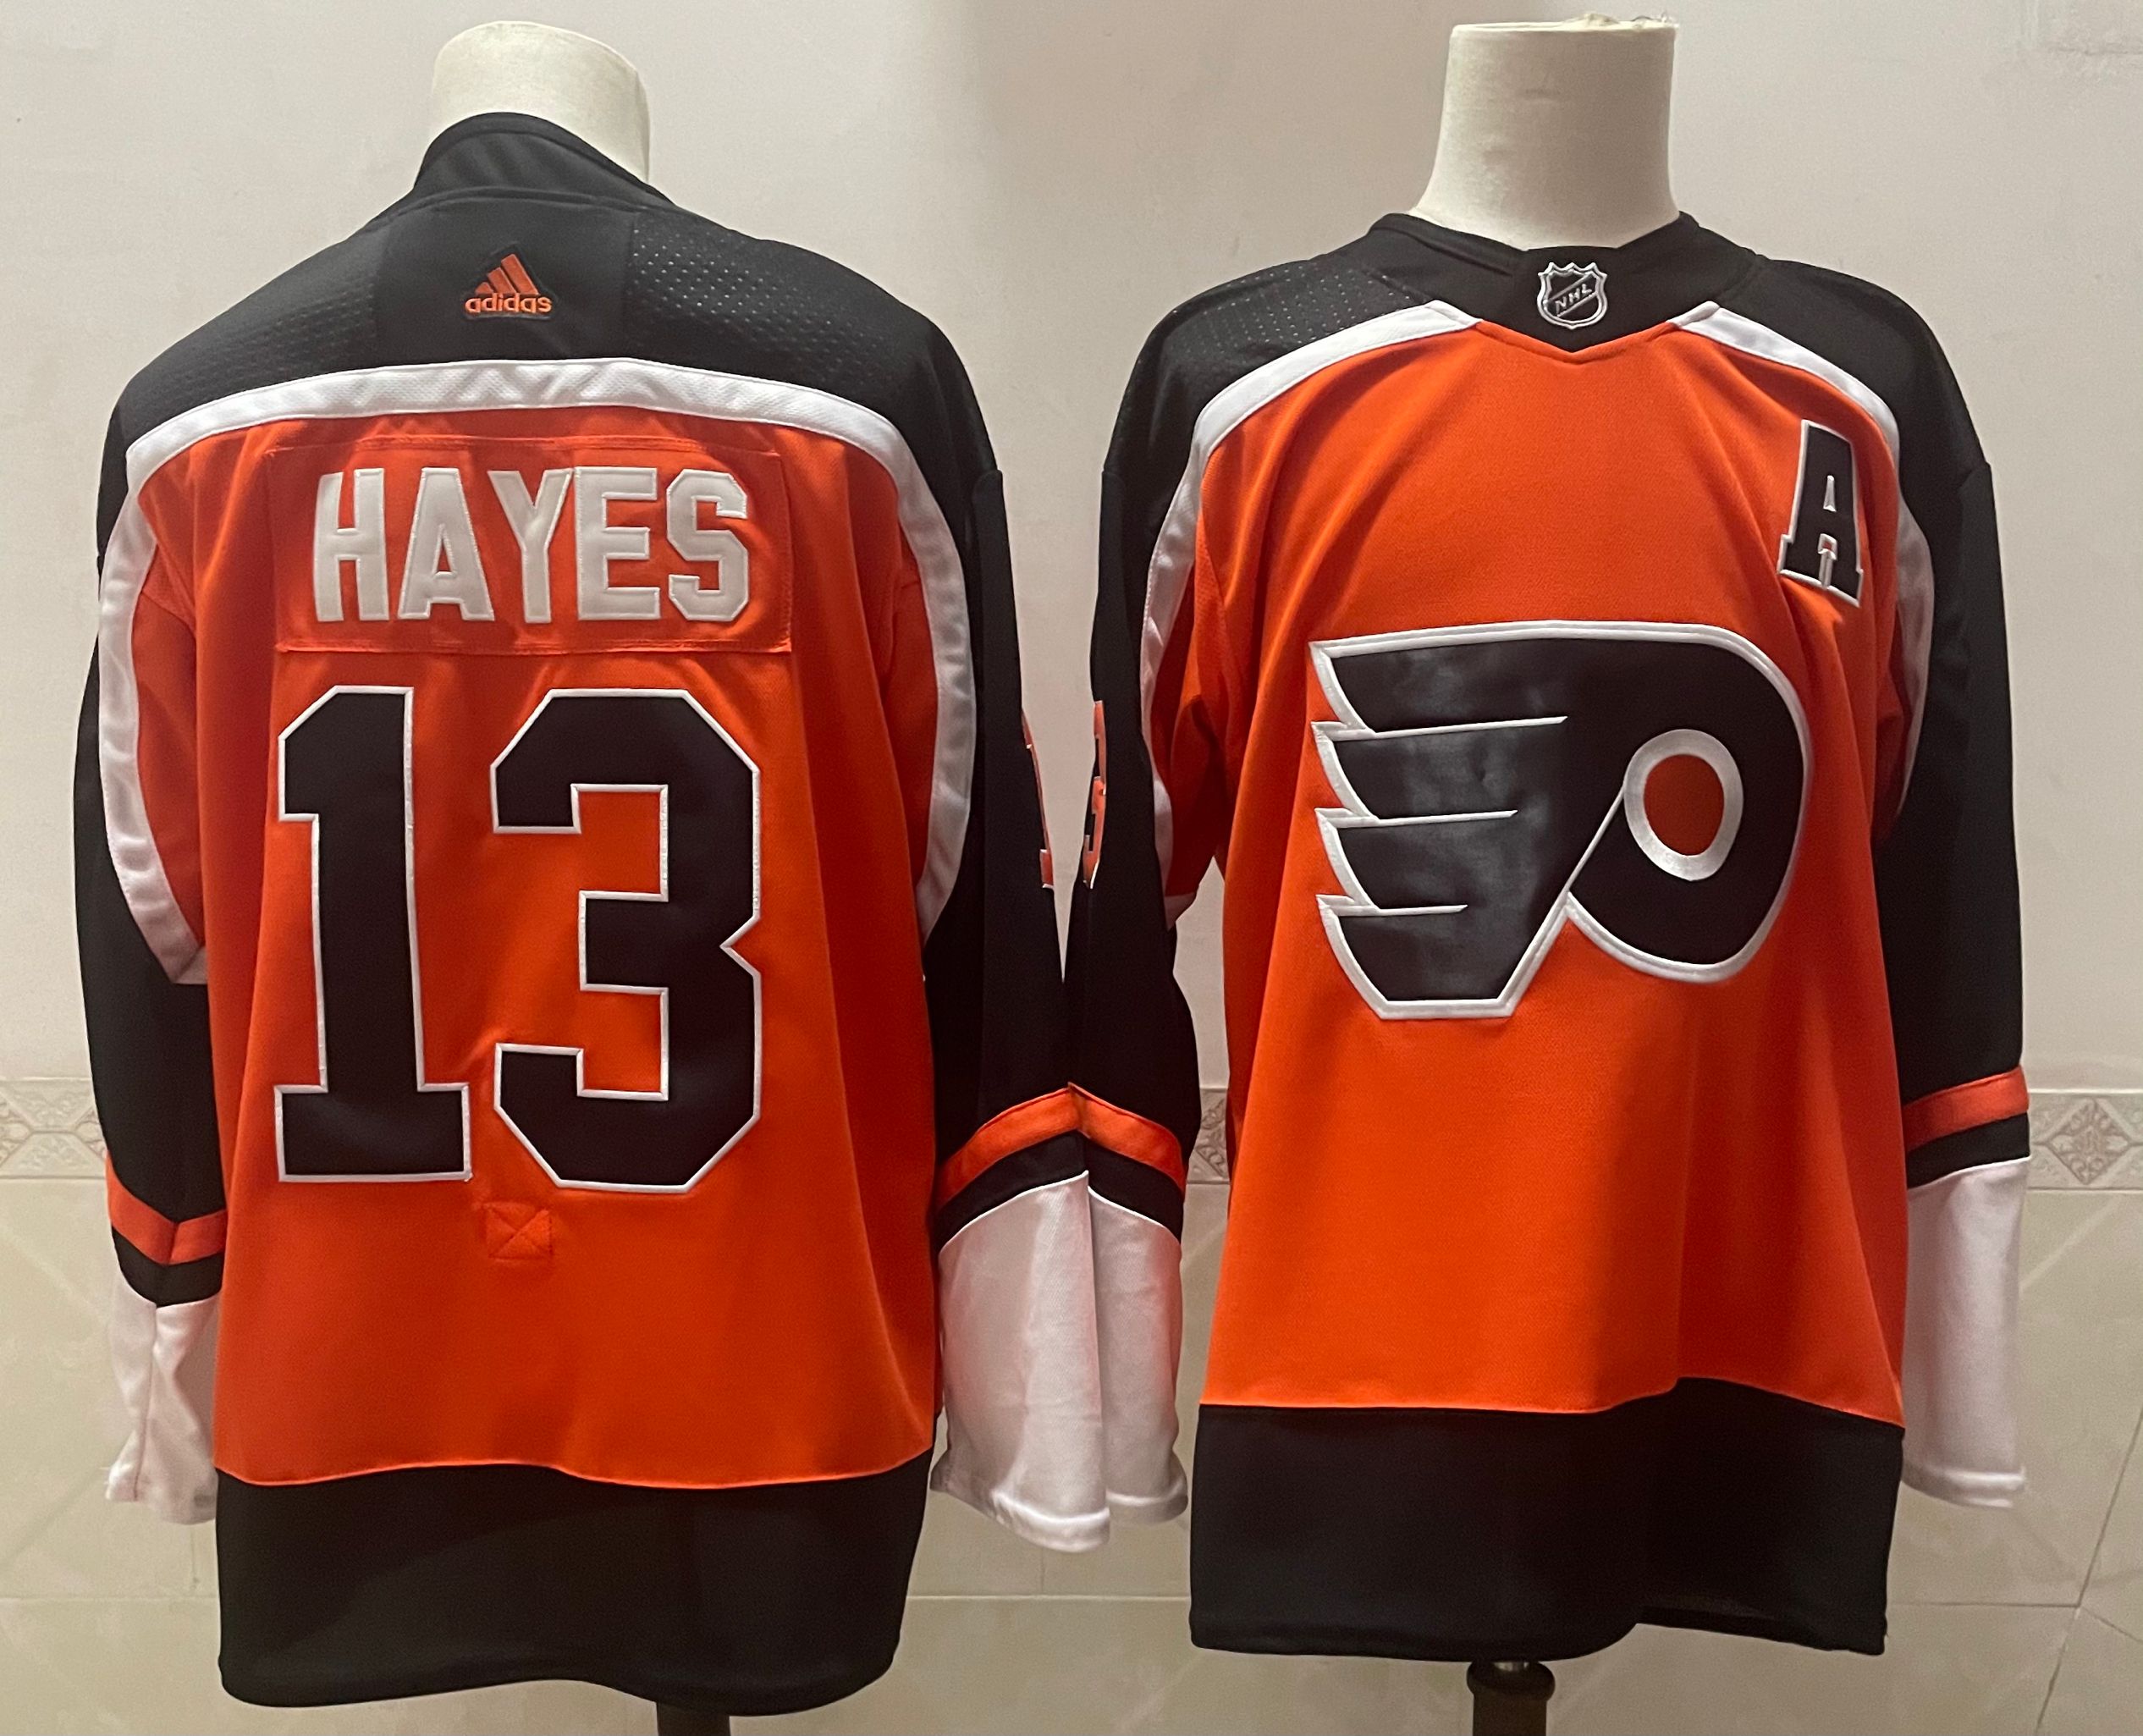 Adidas Men Philadelphia Flyers #13 Hayes Orange Home Authentic Stitched NHL Jersey